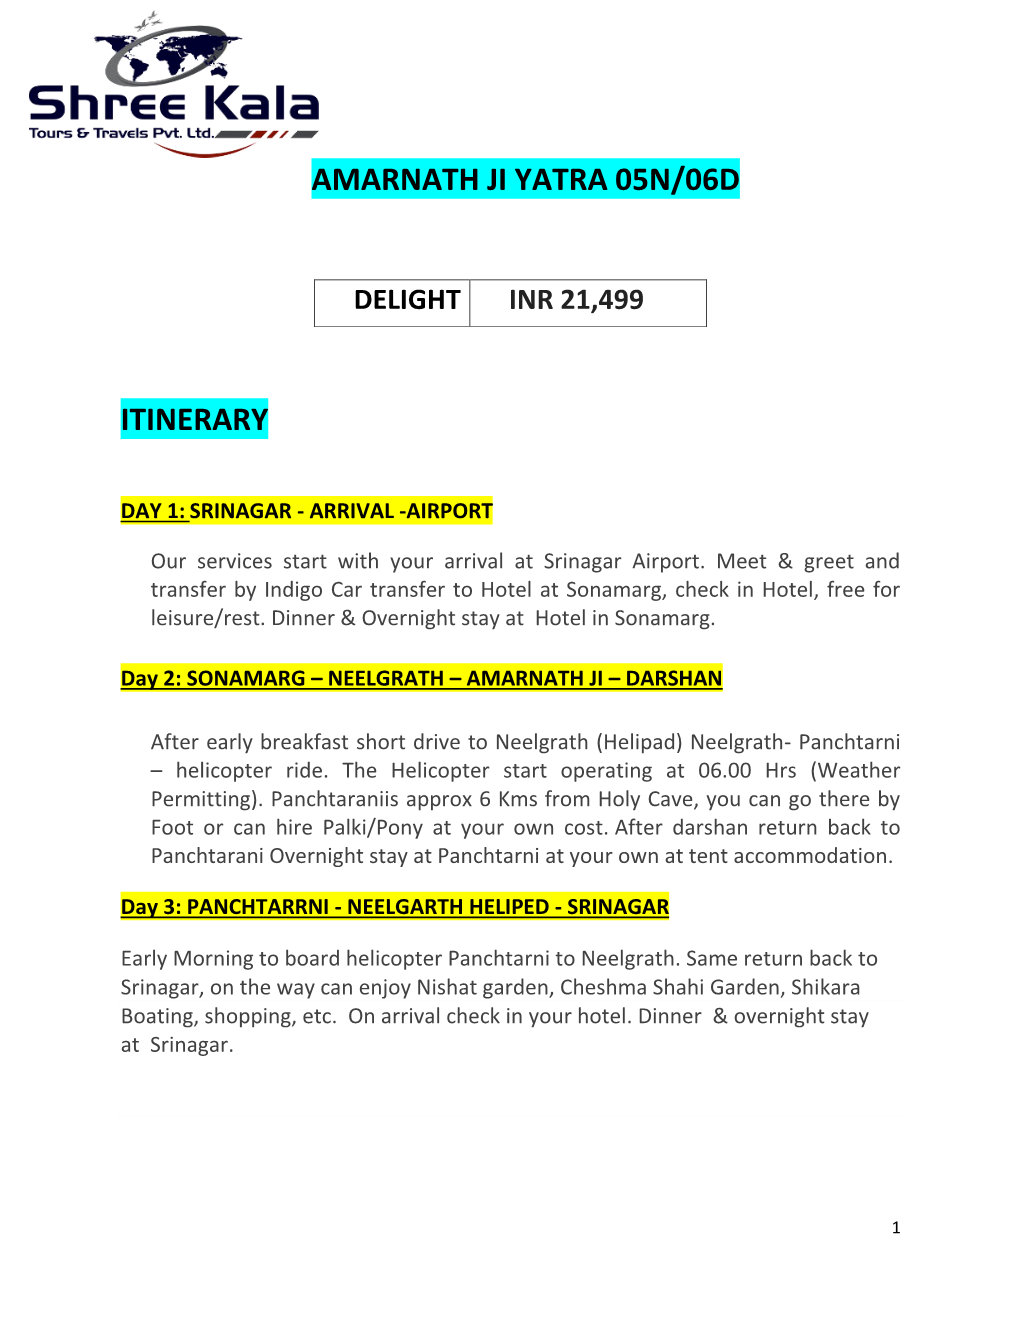 Amarnath Ji Yatra 05N/06D Itinerary